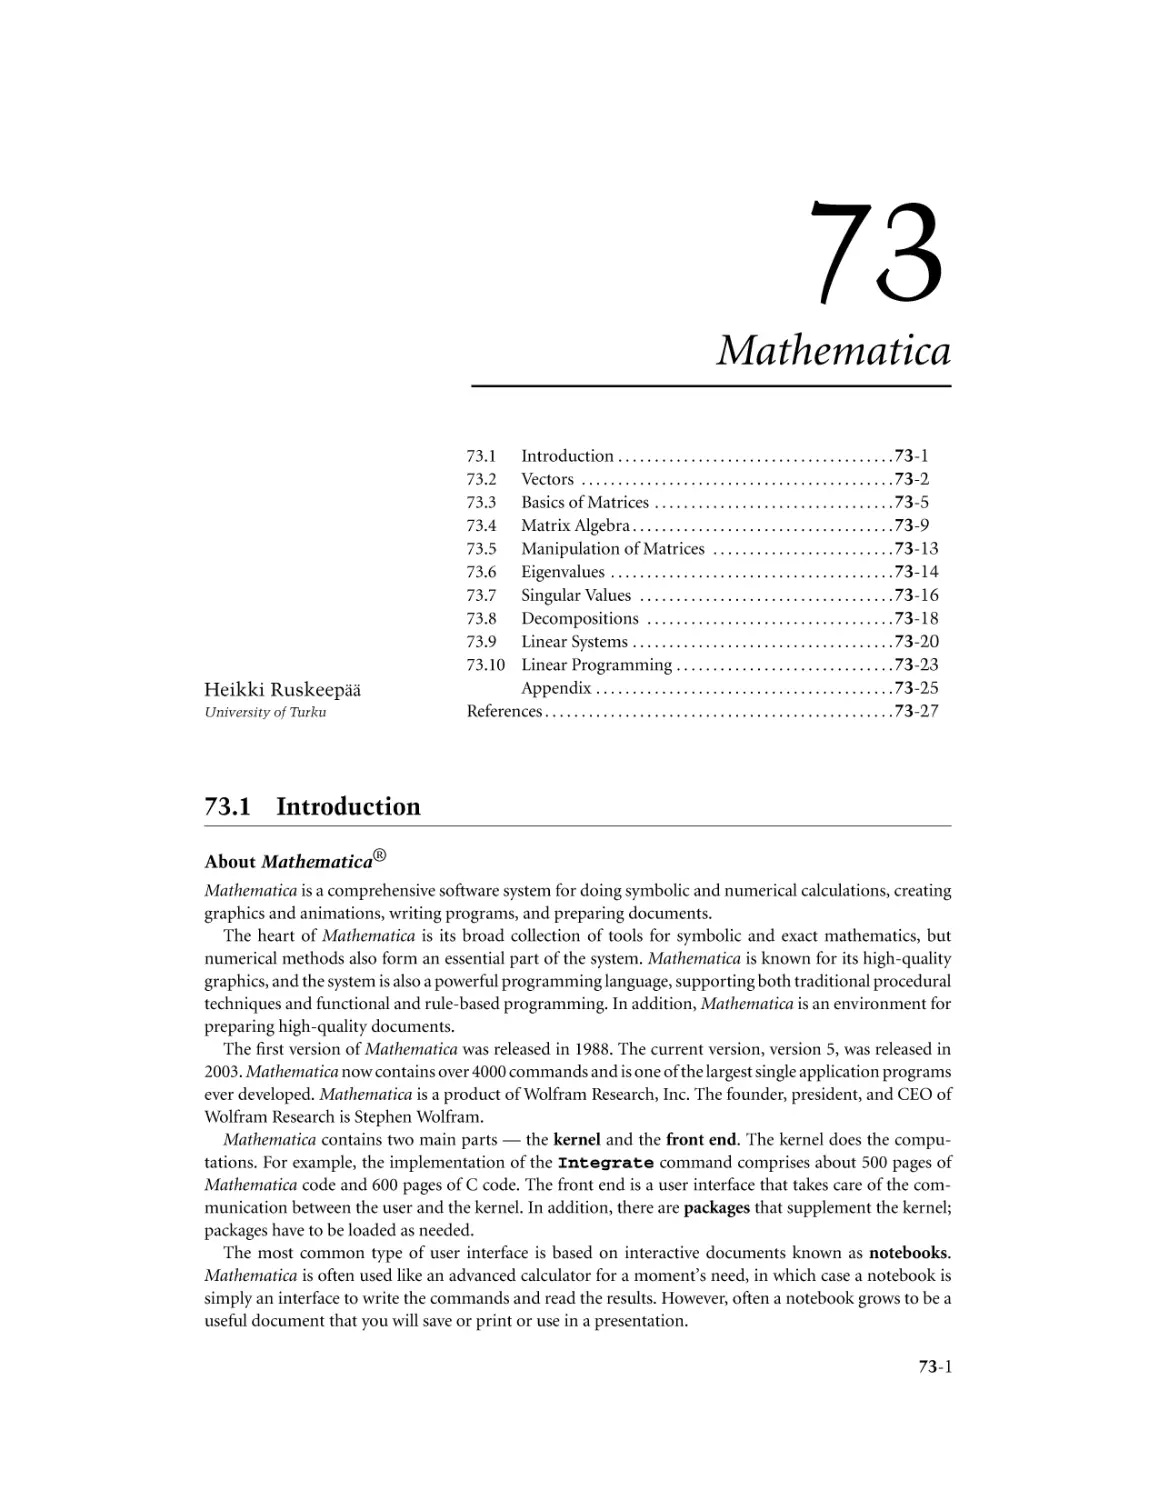 Chapter 73. Mathematica